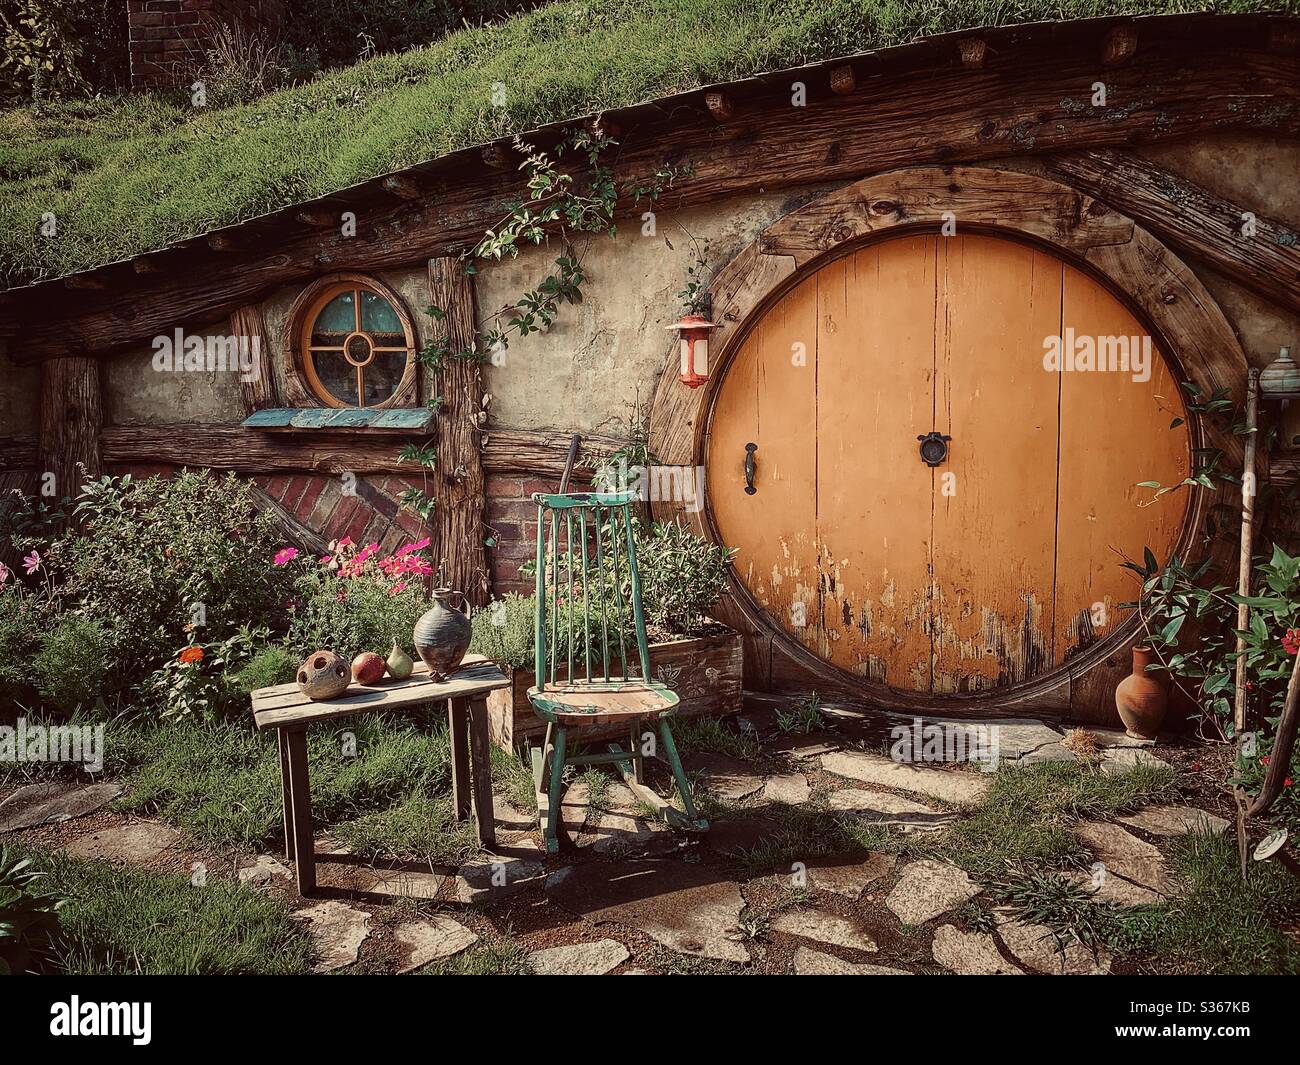 Hobbiton. Bukolischer Ort in Neuseeland, wo die Hobbits aus der Mittelerde leben. Lord of the rings Filmset. Stockfoto